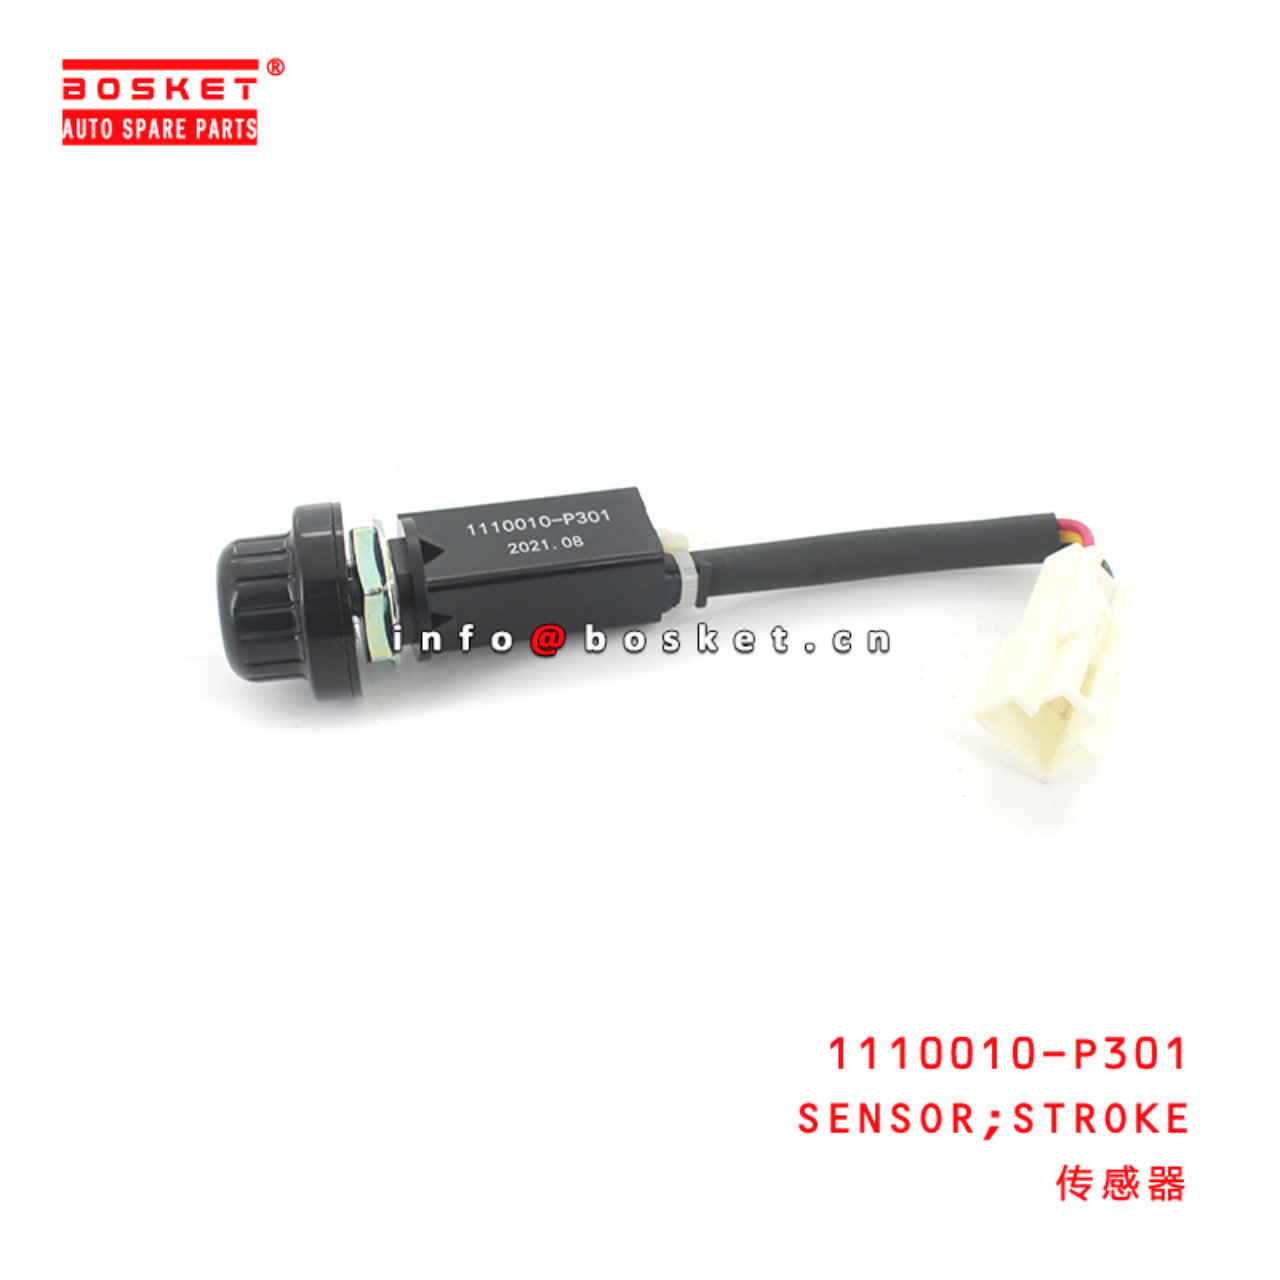 1110010-P301 Stroke Sensor suitable for ISUZU 1110010-P301